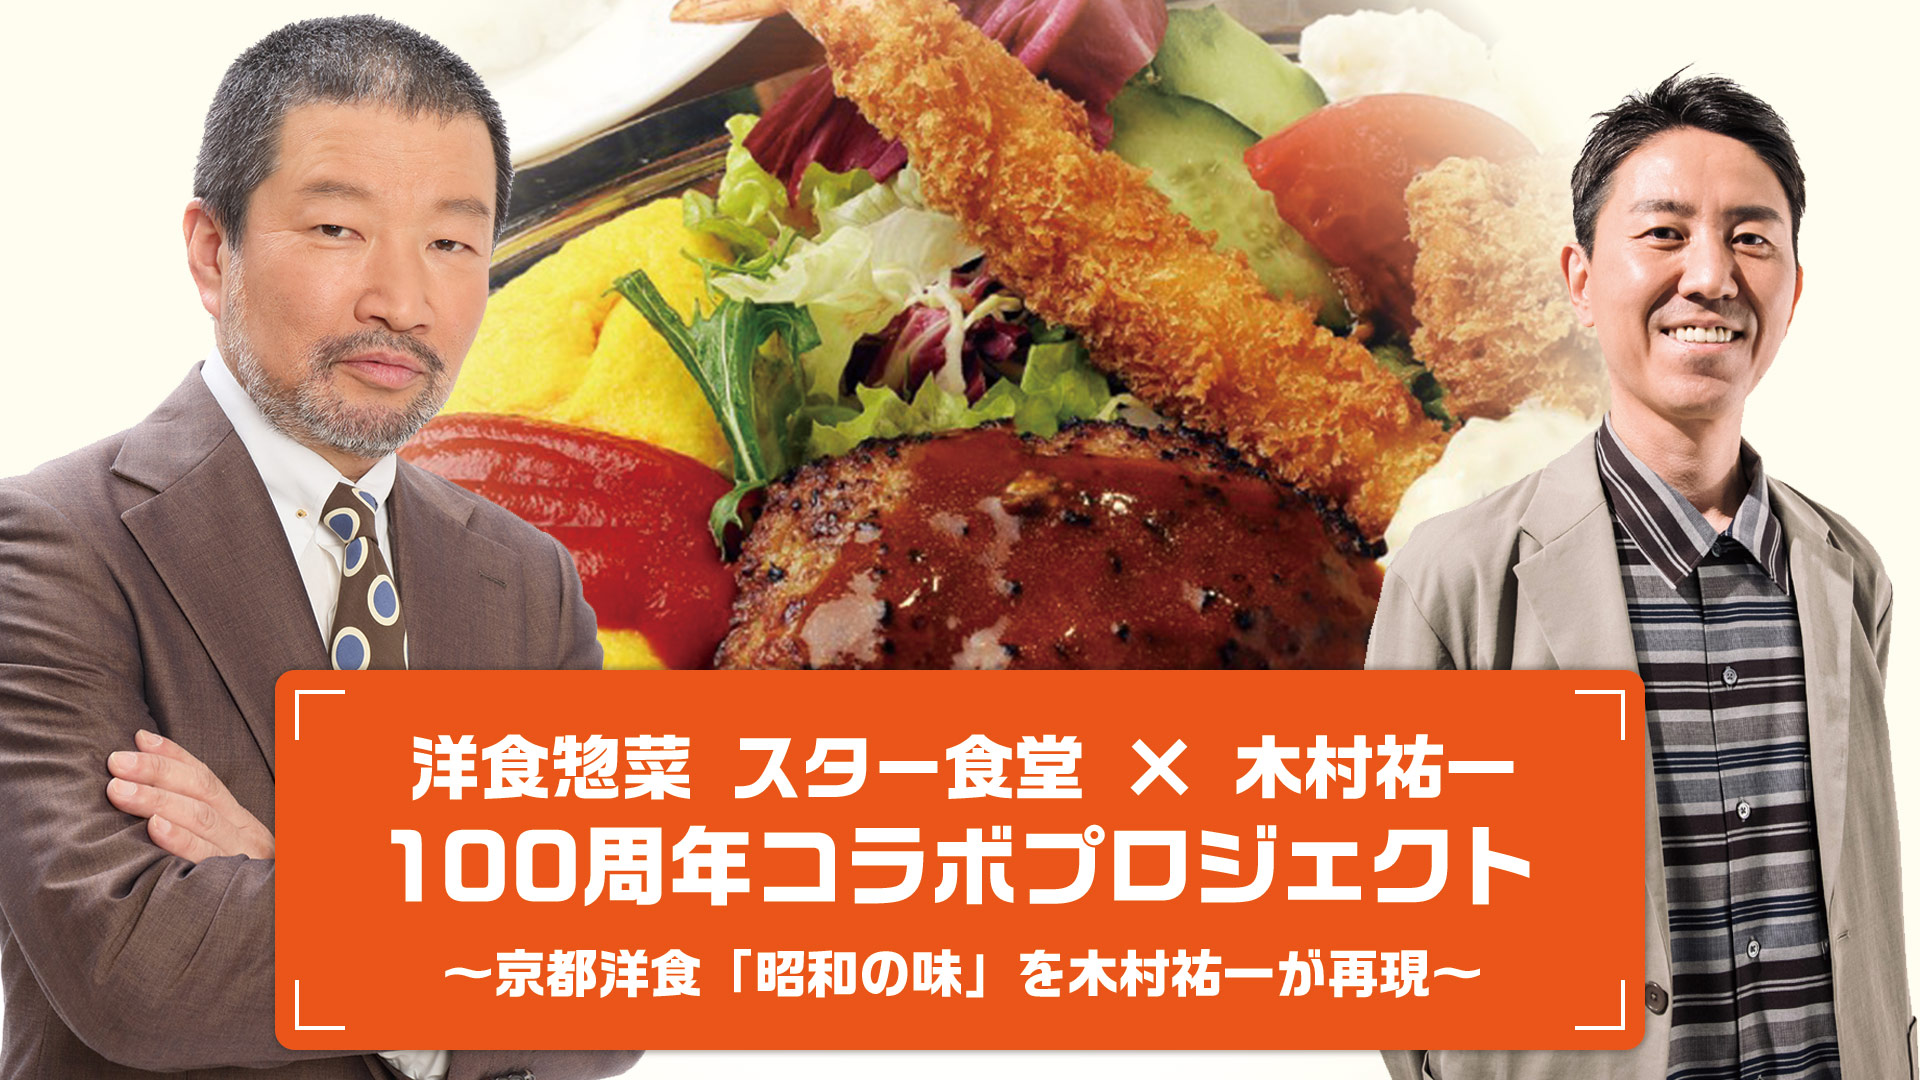 'Western-style Everyday Food Restaurant Star Shokudo x Yuichi Kimura' 100th Anniversary Collaboration Project - Yuichi Kimura recreates the Kyoto Western Cuisine 'Taste of Showa'